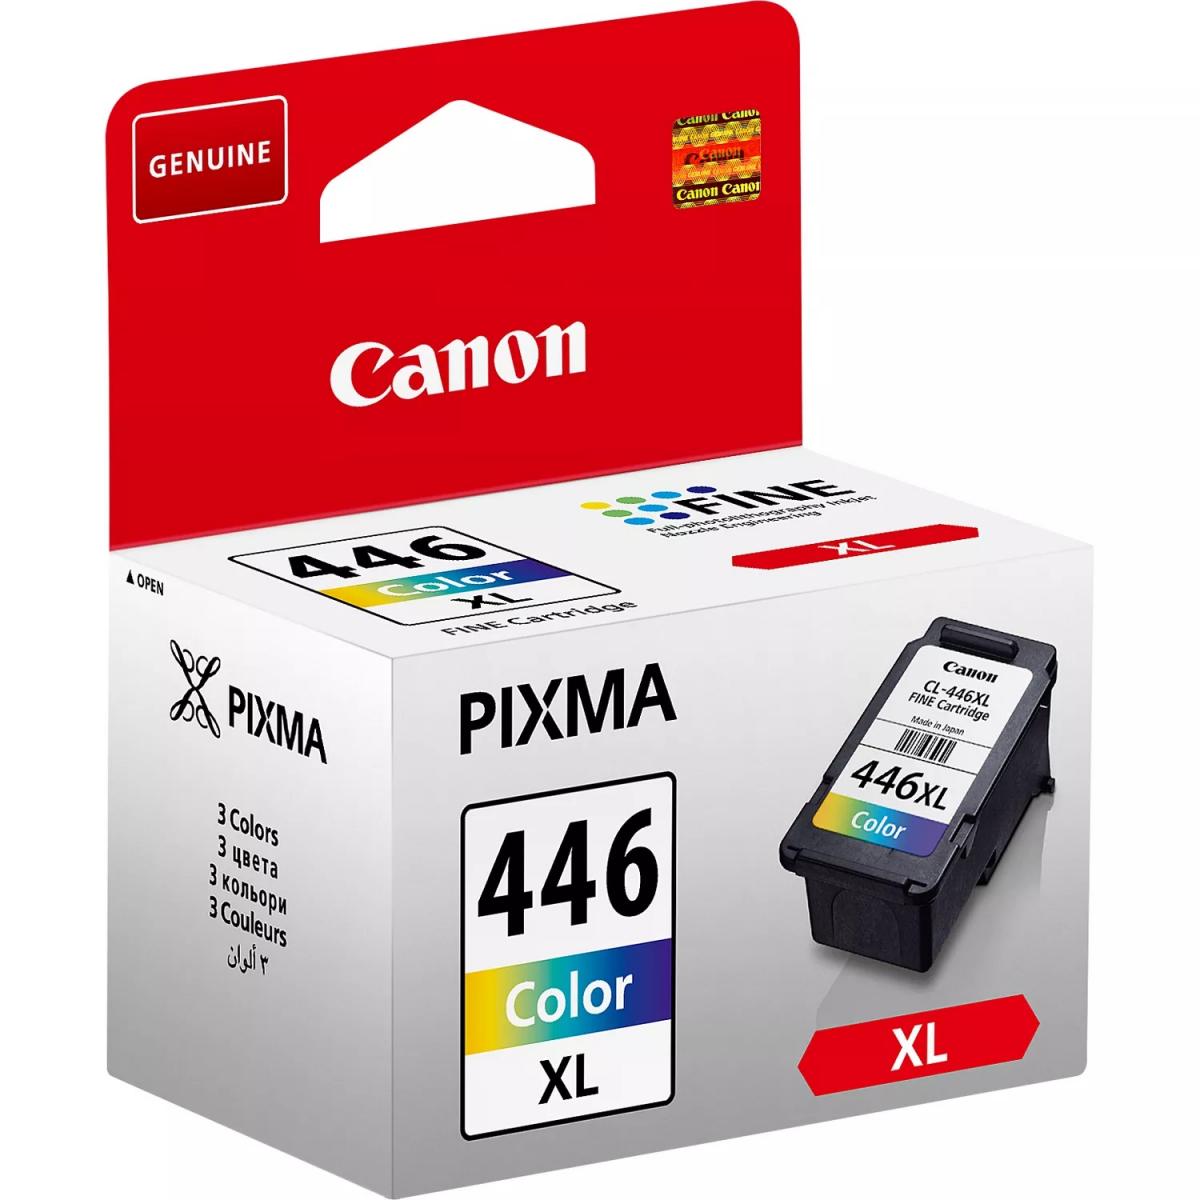 Canon CL-446XL Color Inkjet Cartridge